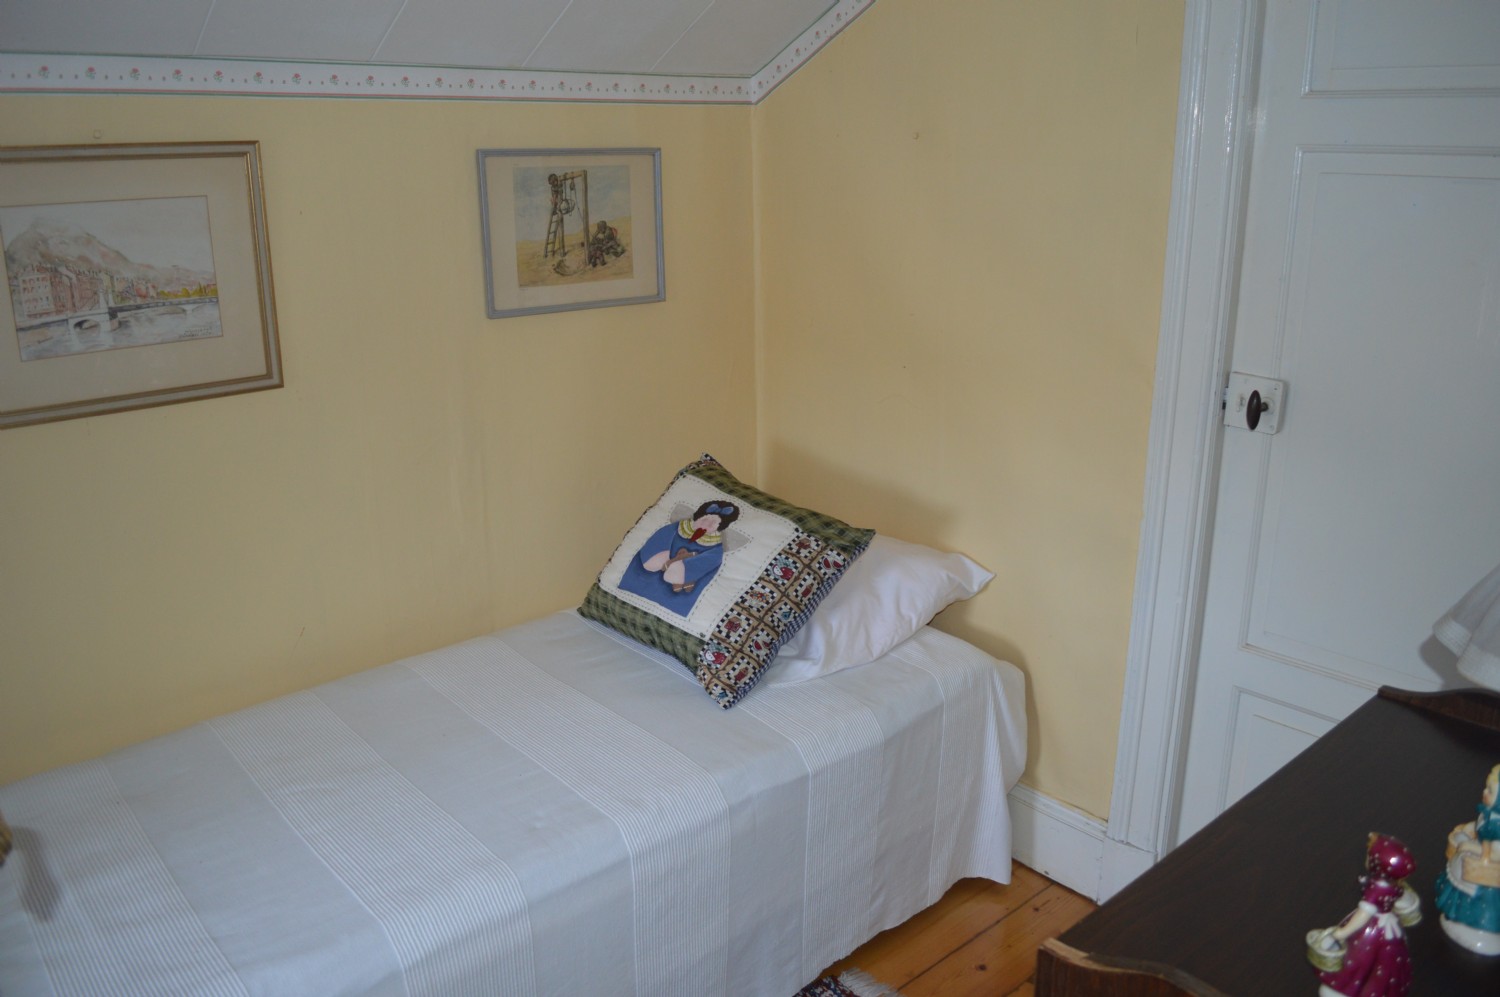 Sovrum 3 .v med enkelsng/ Bed room 2 whit single bed upper floor 